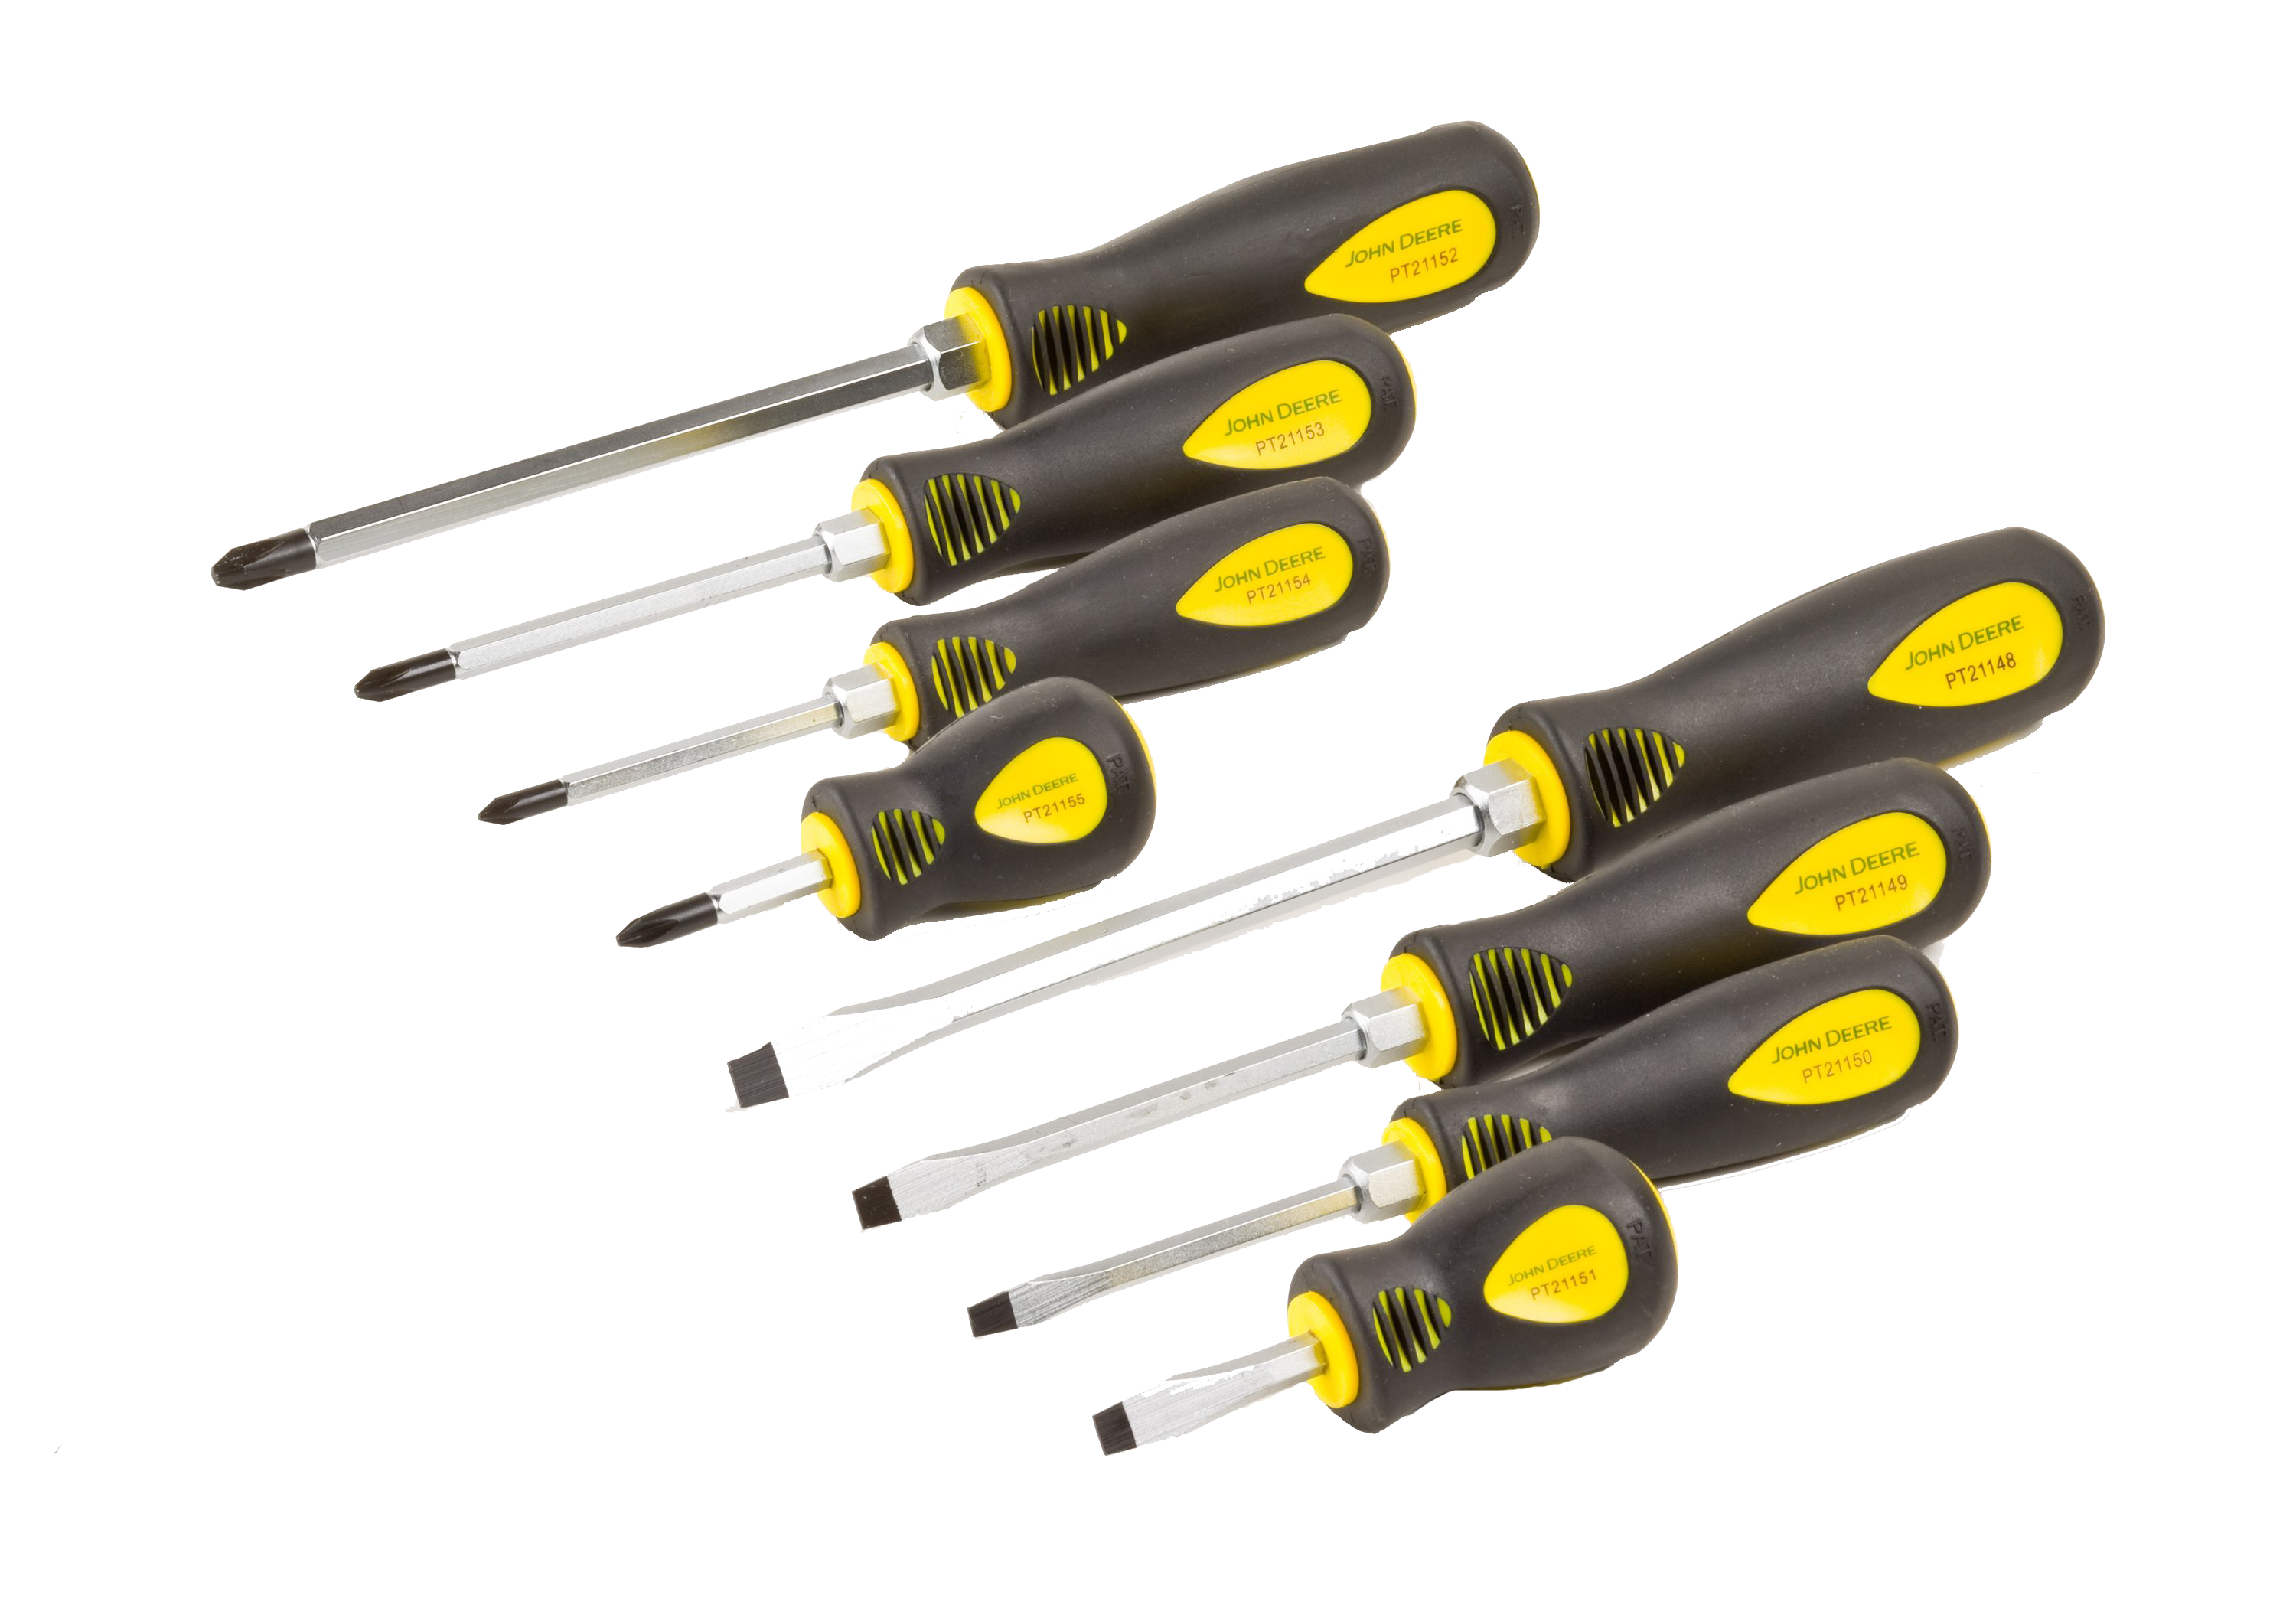 8 John Deere screwdrivers